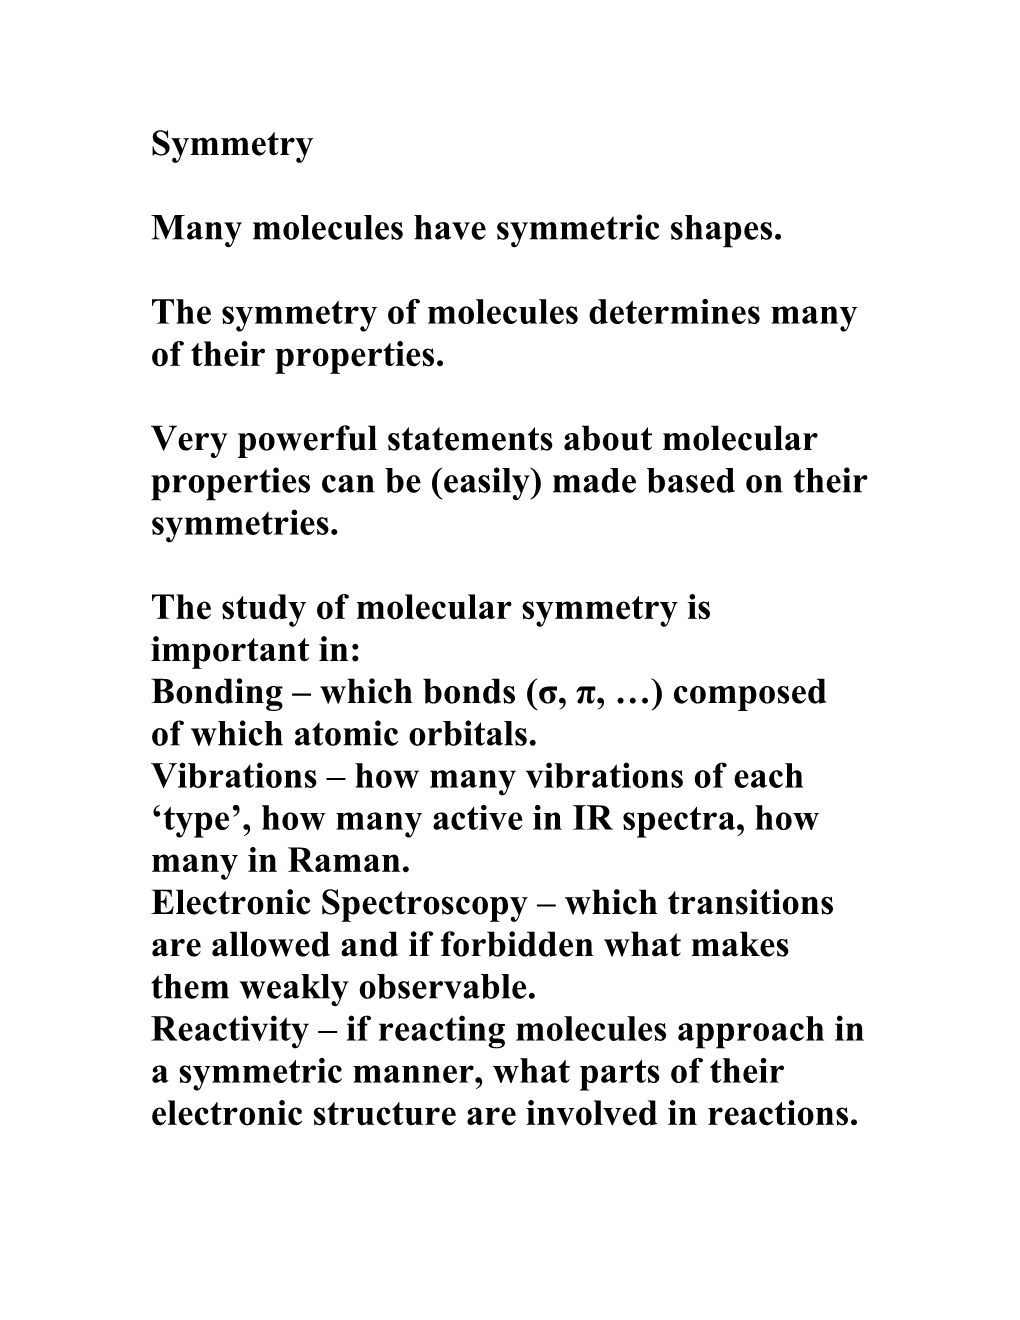 Many Molecules Have Symmetric Shapes